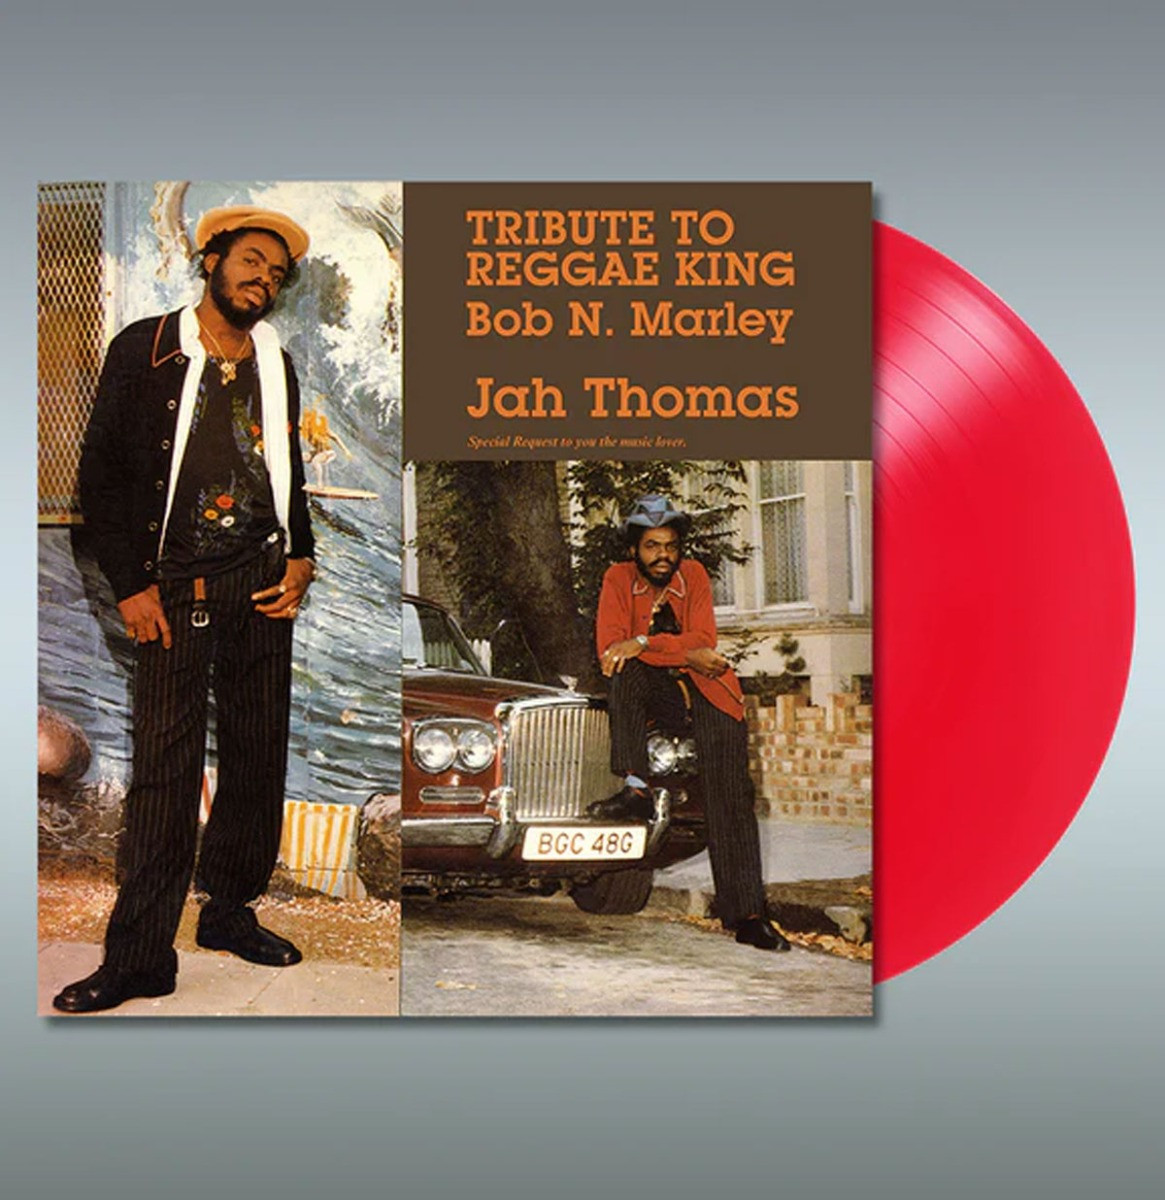 Jah Thomas - Tribute To Reggae King Bob N. Marley LP